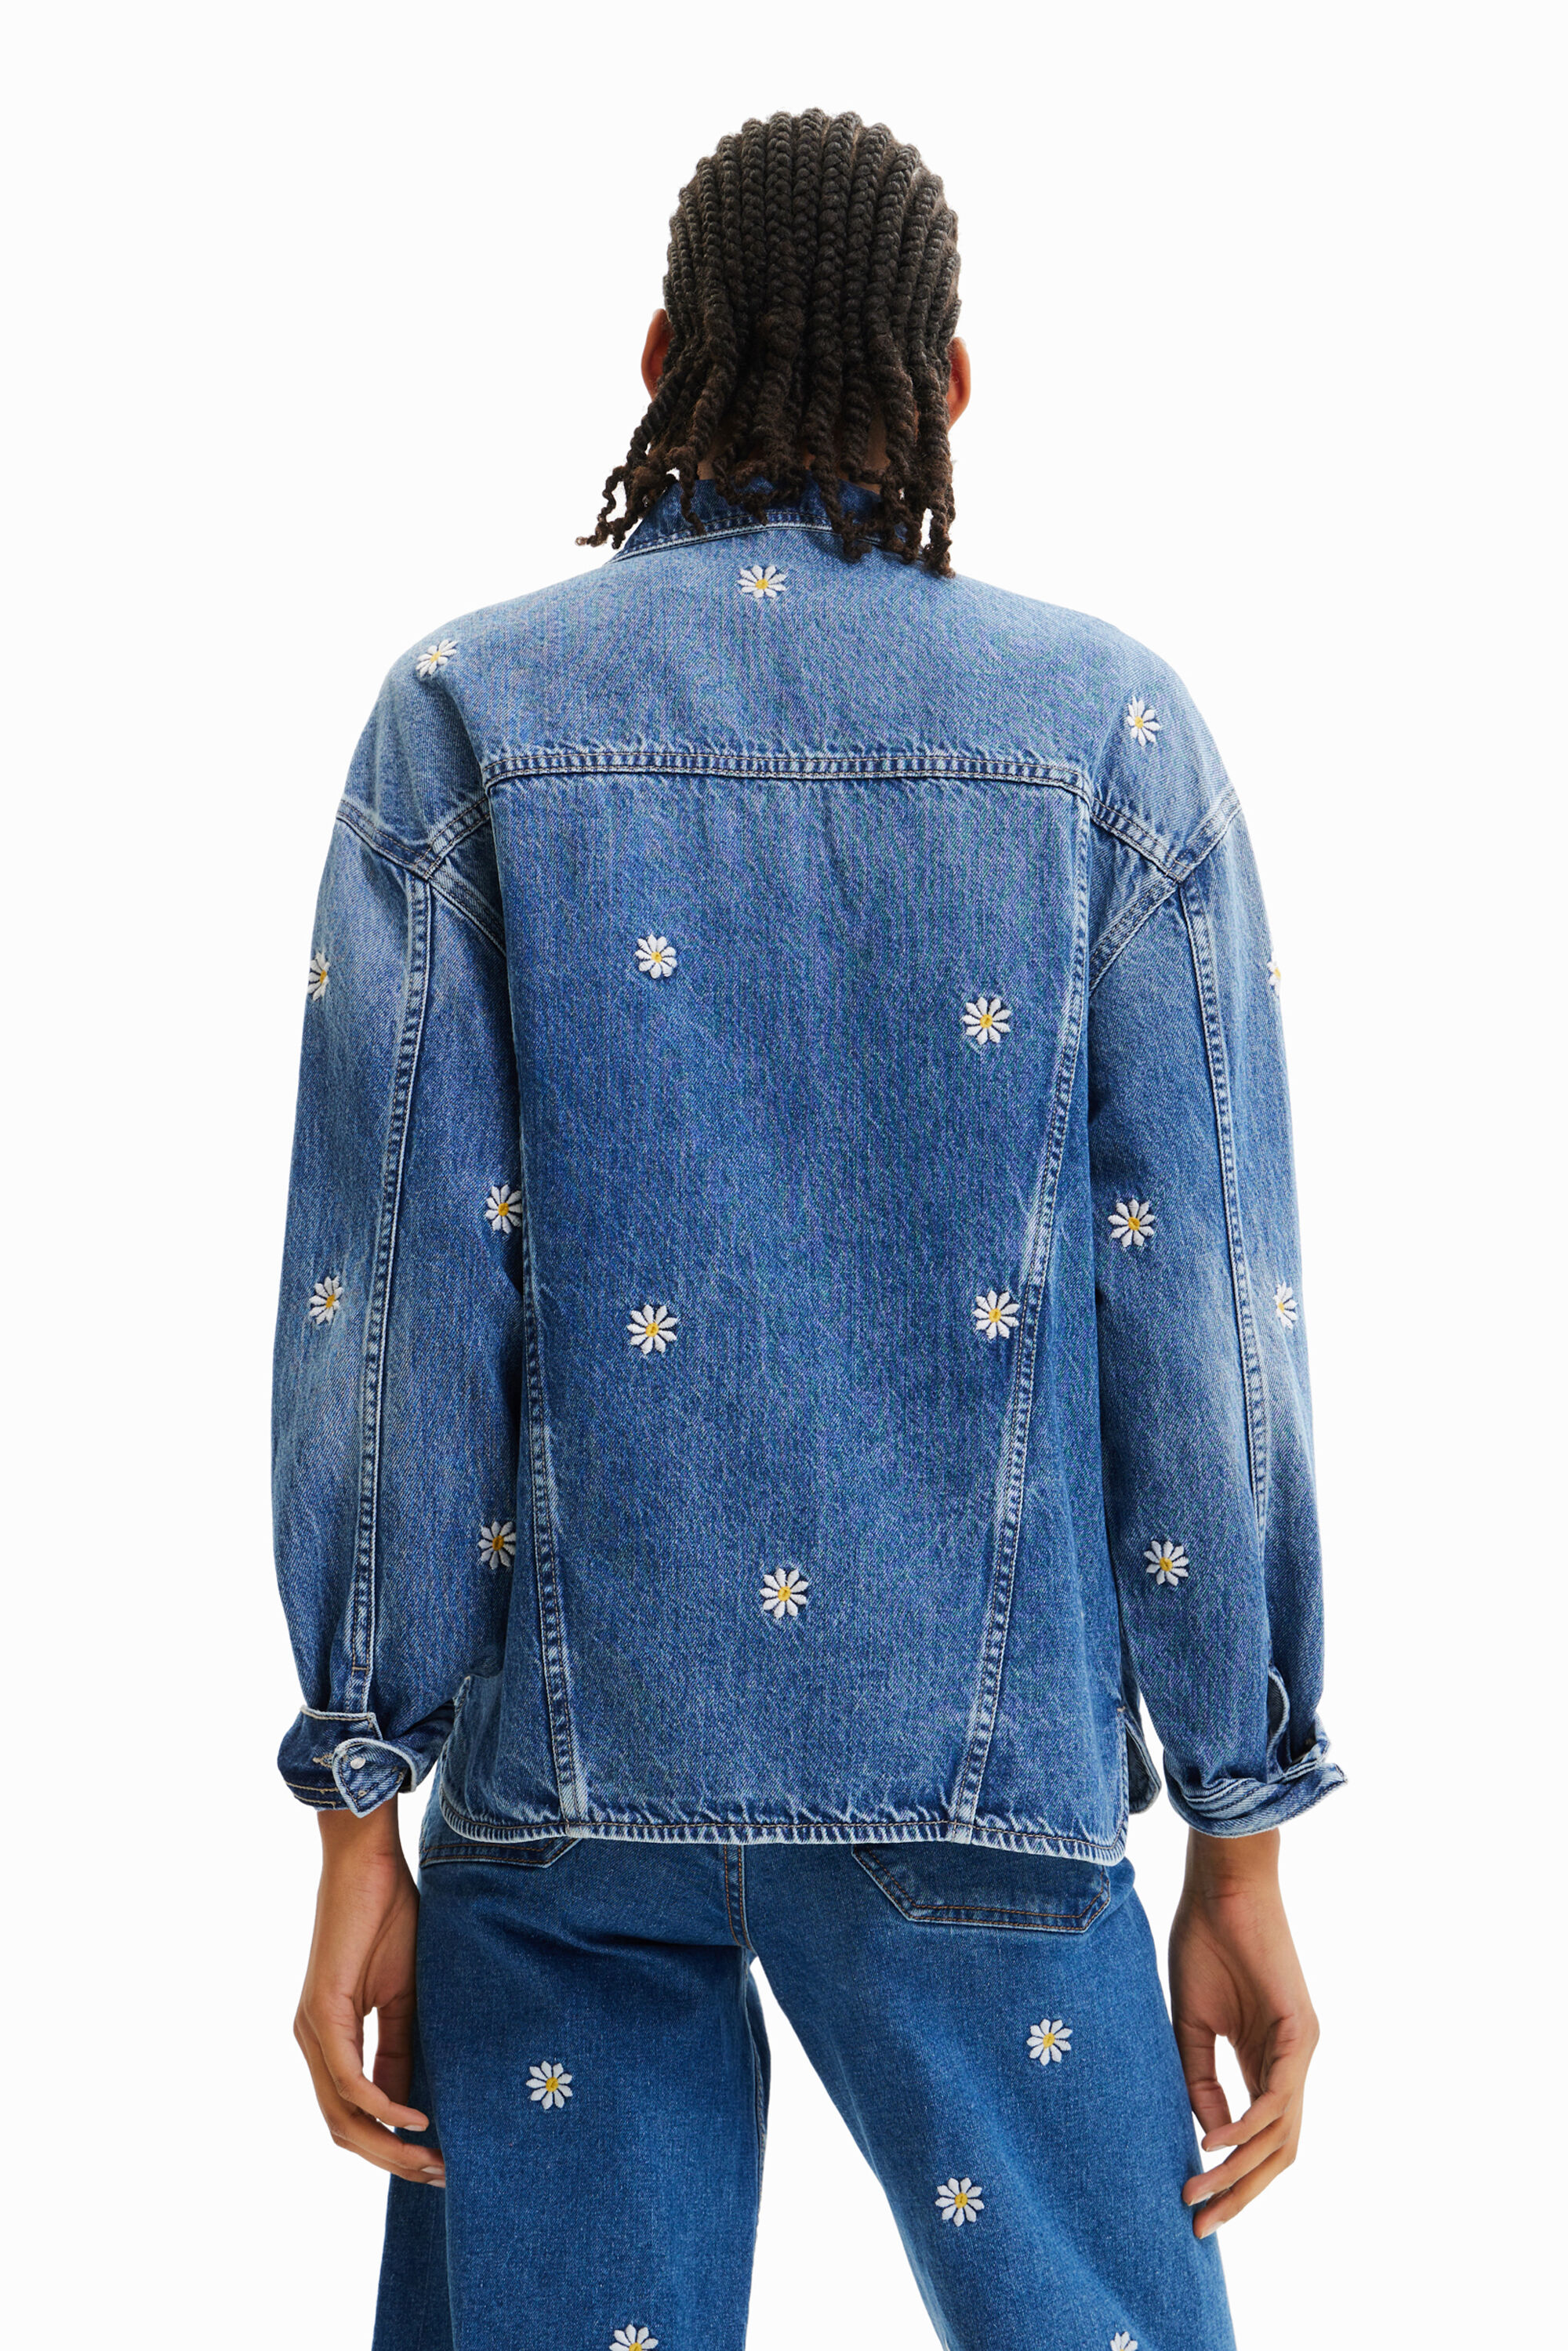 Desigual DAISY denim jacket Summer 2023 collection in Vancouver Canada